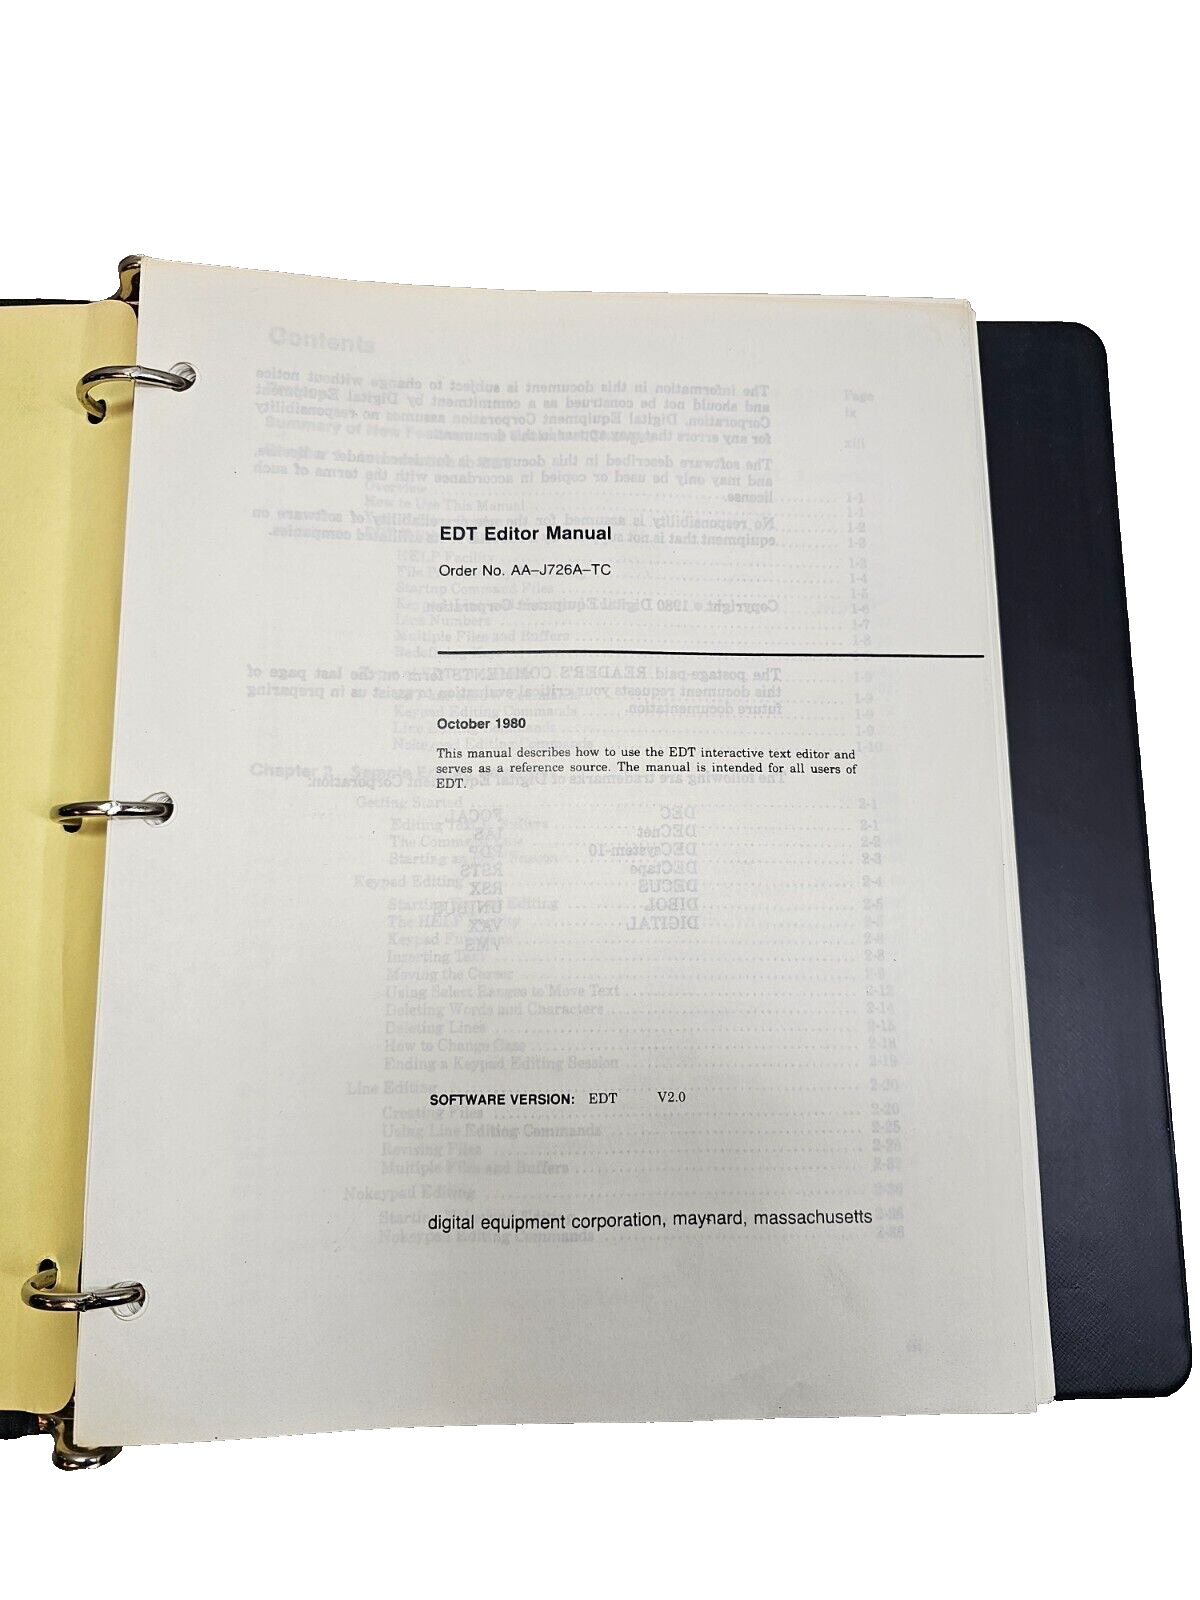 Vintage 1980 DEC Digital Equipment EDT Editor Manual AA-J726A-TC